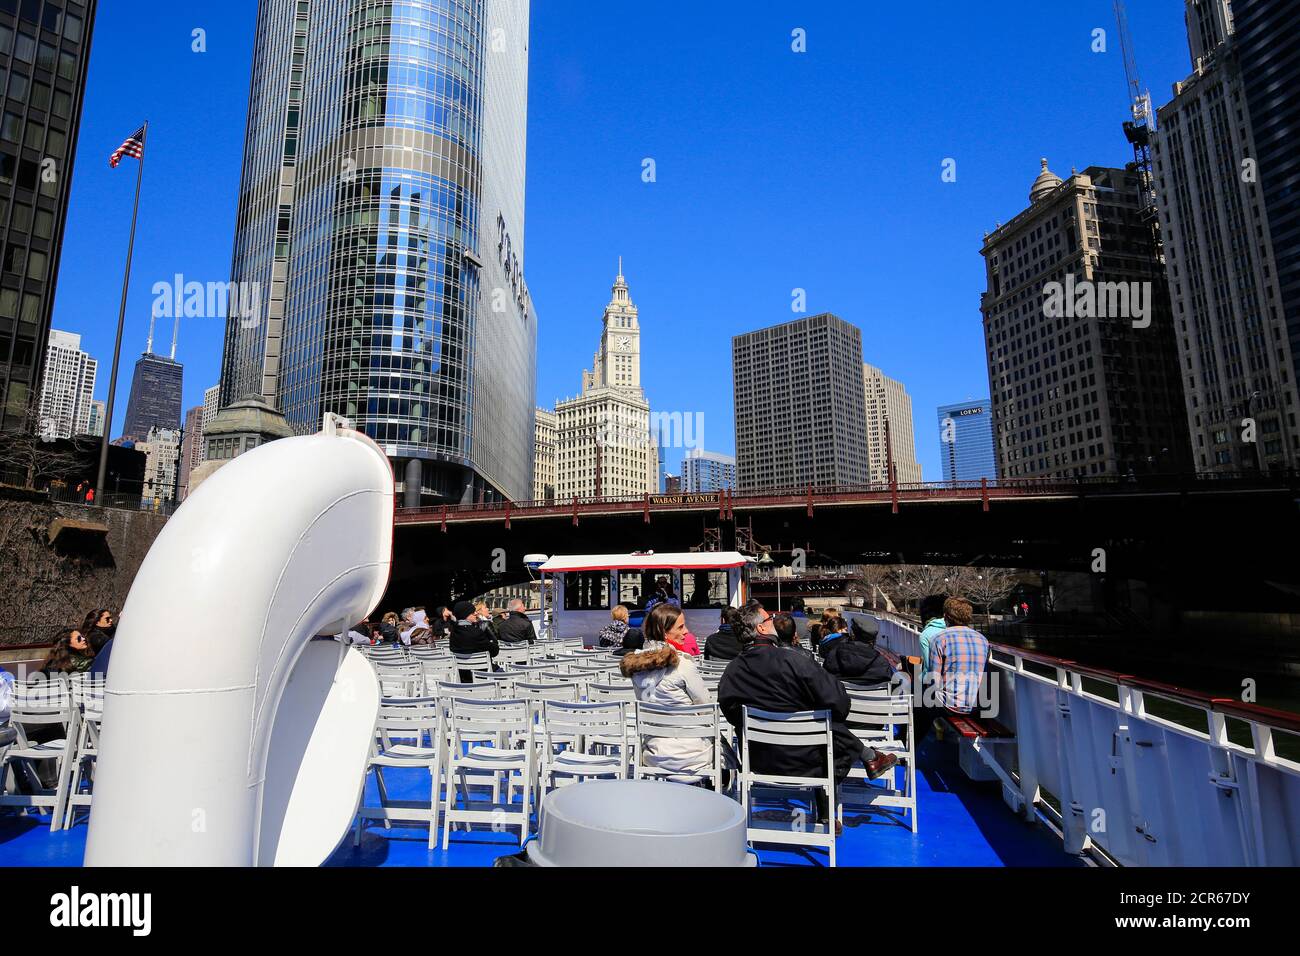 Bootstour auf dem Chicago River, Skyline, Chicago, Illinois, USA, Nordamerika Stockfoto